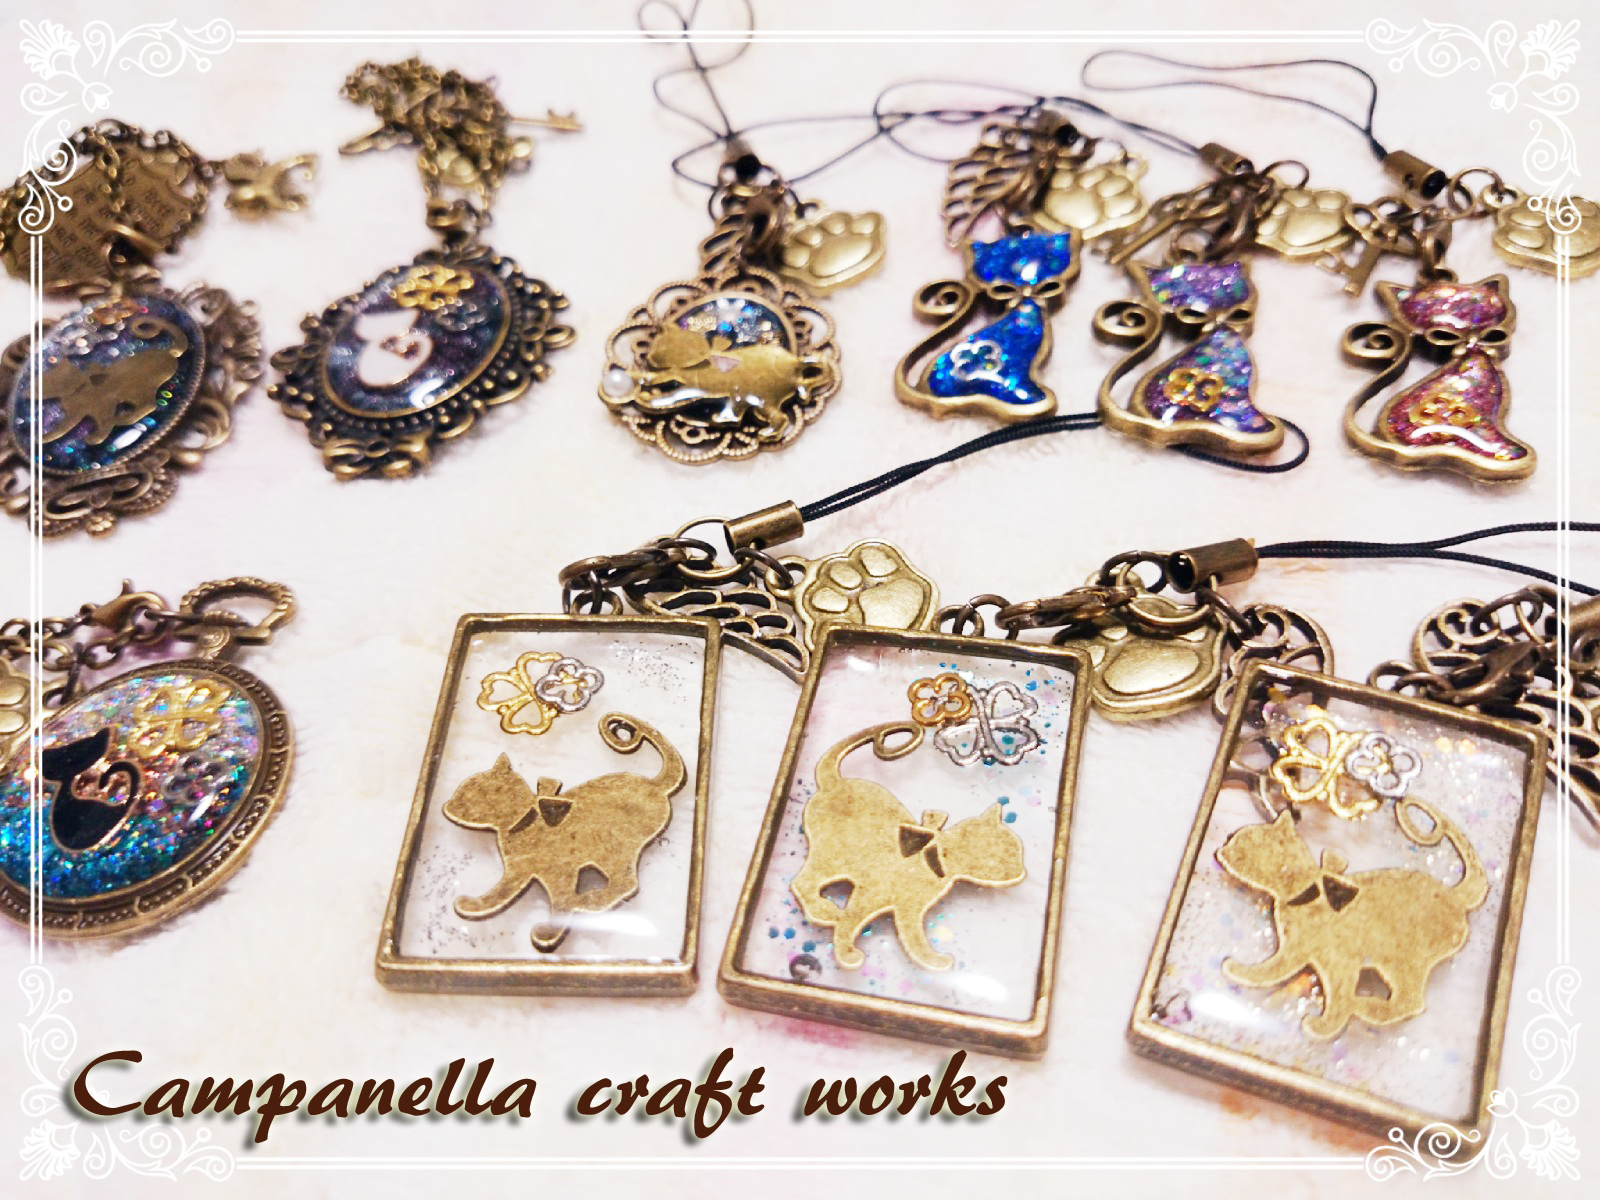 Campanella craft works